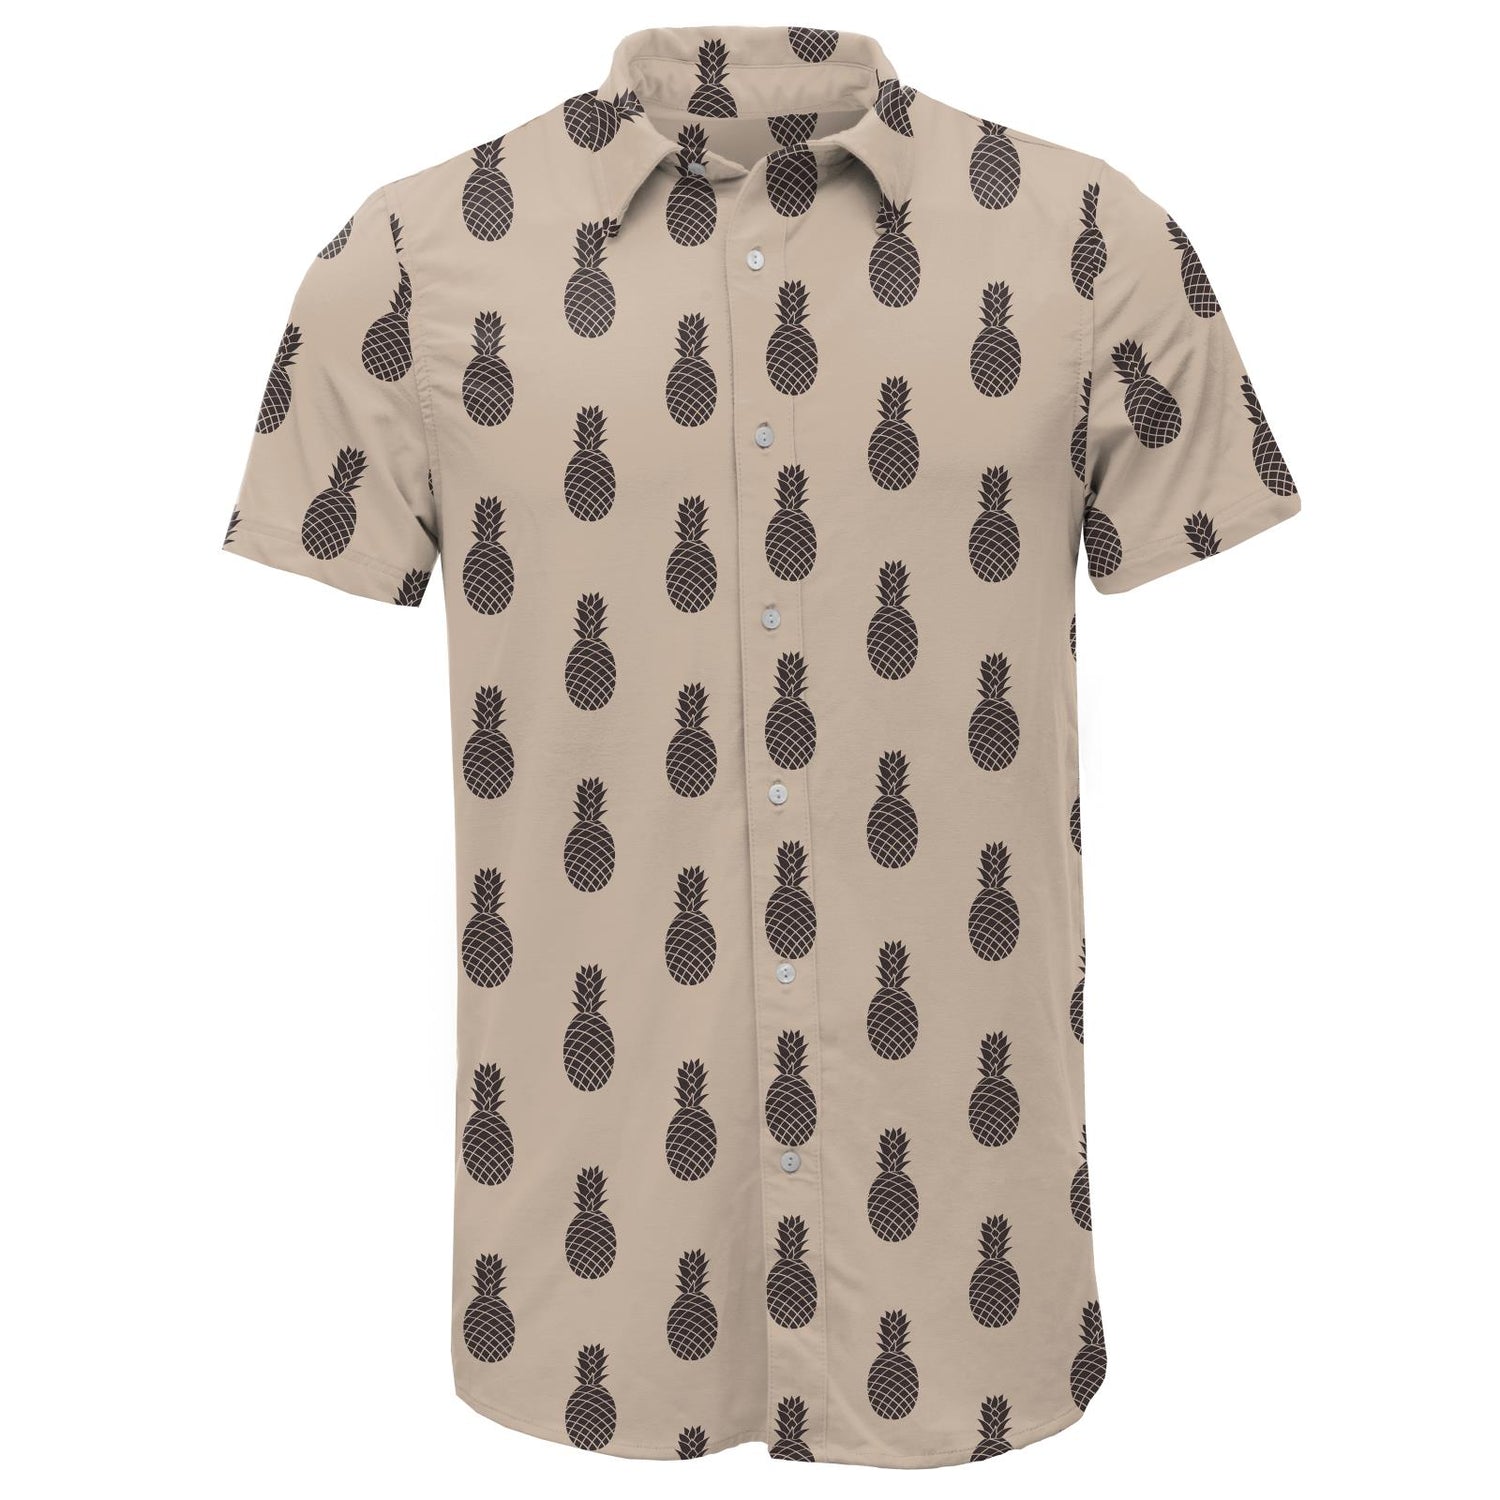 Men's Print Short Sleeve Button Down Shirt in Burlap Pineapples